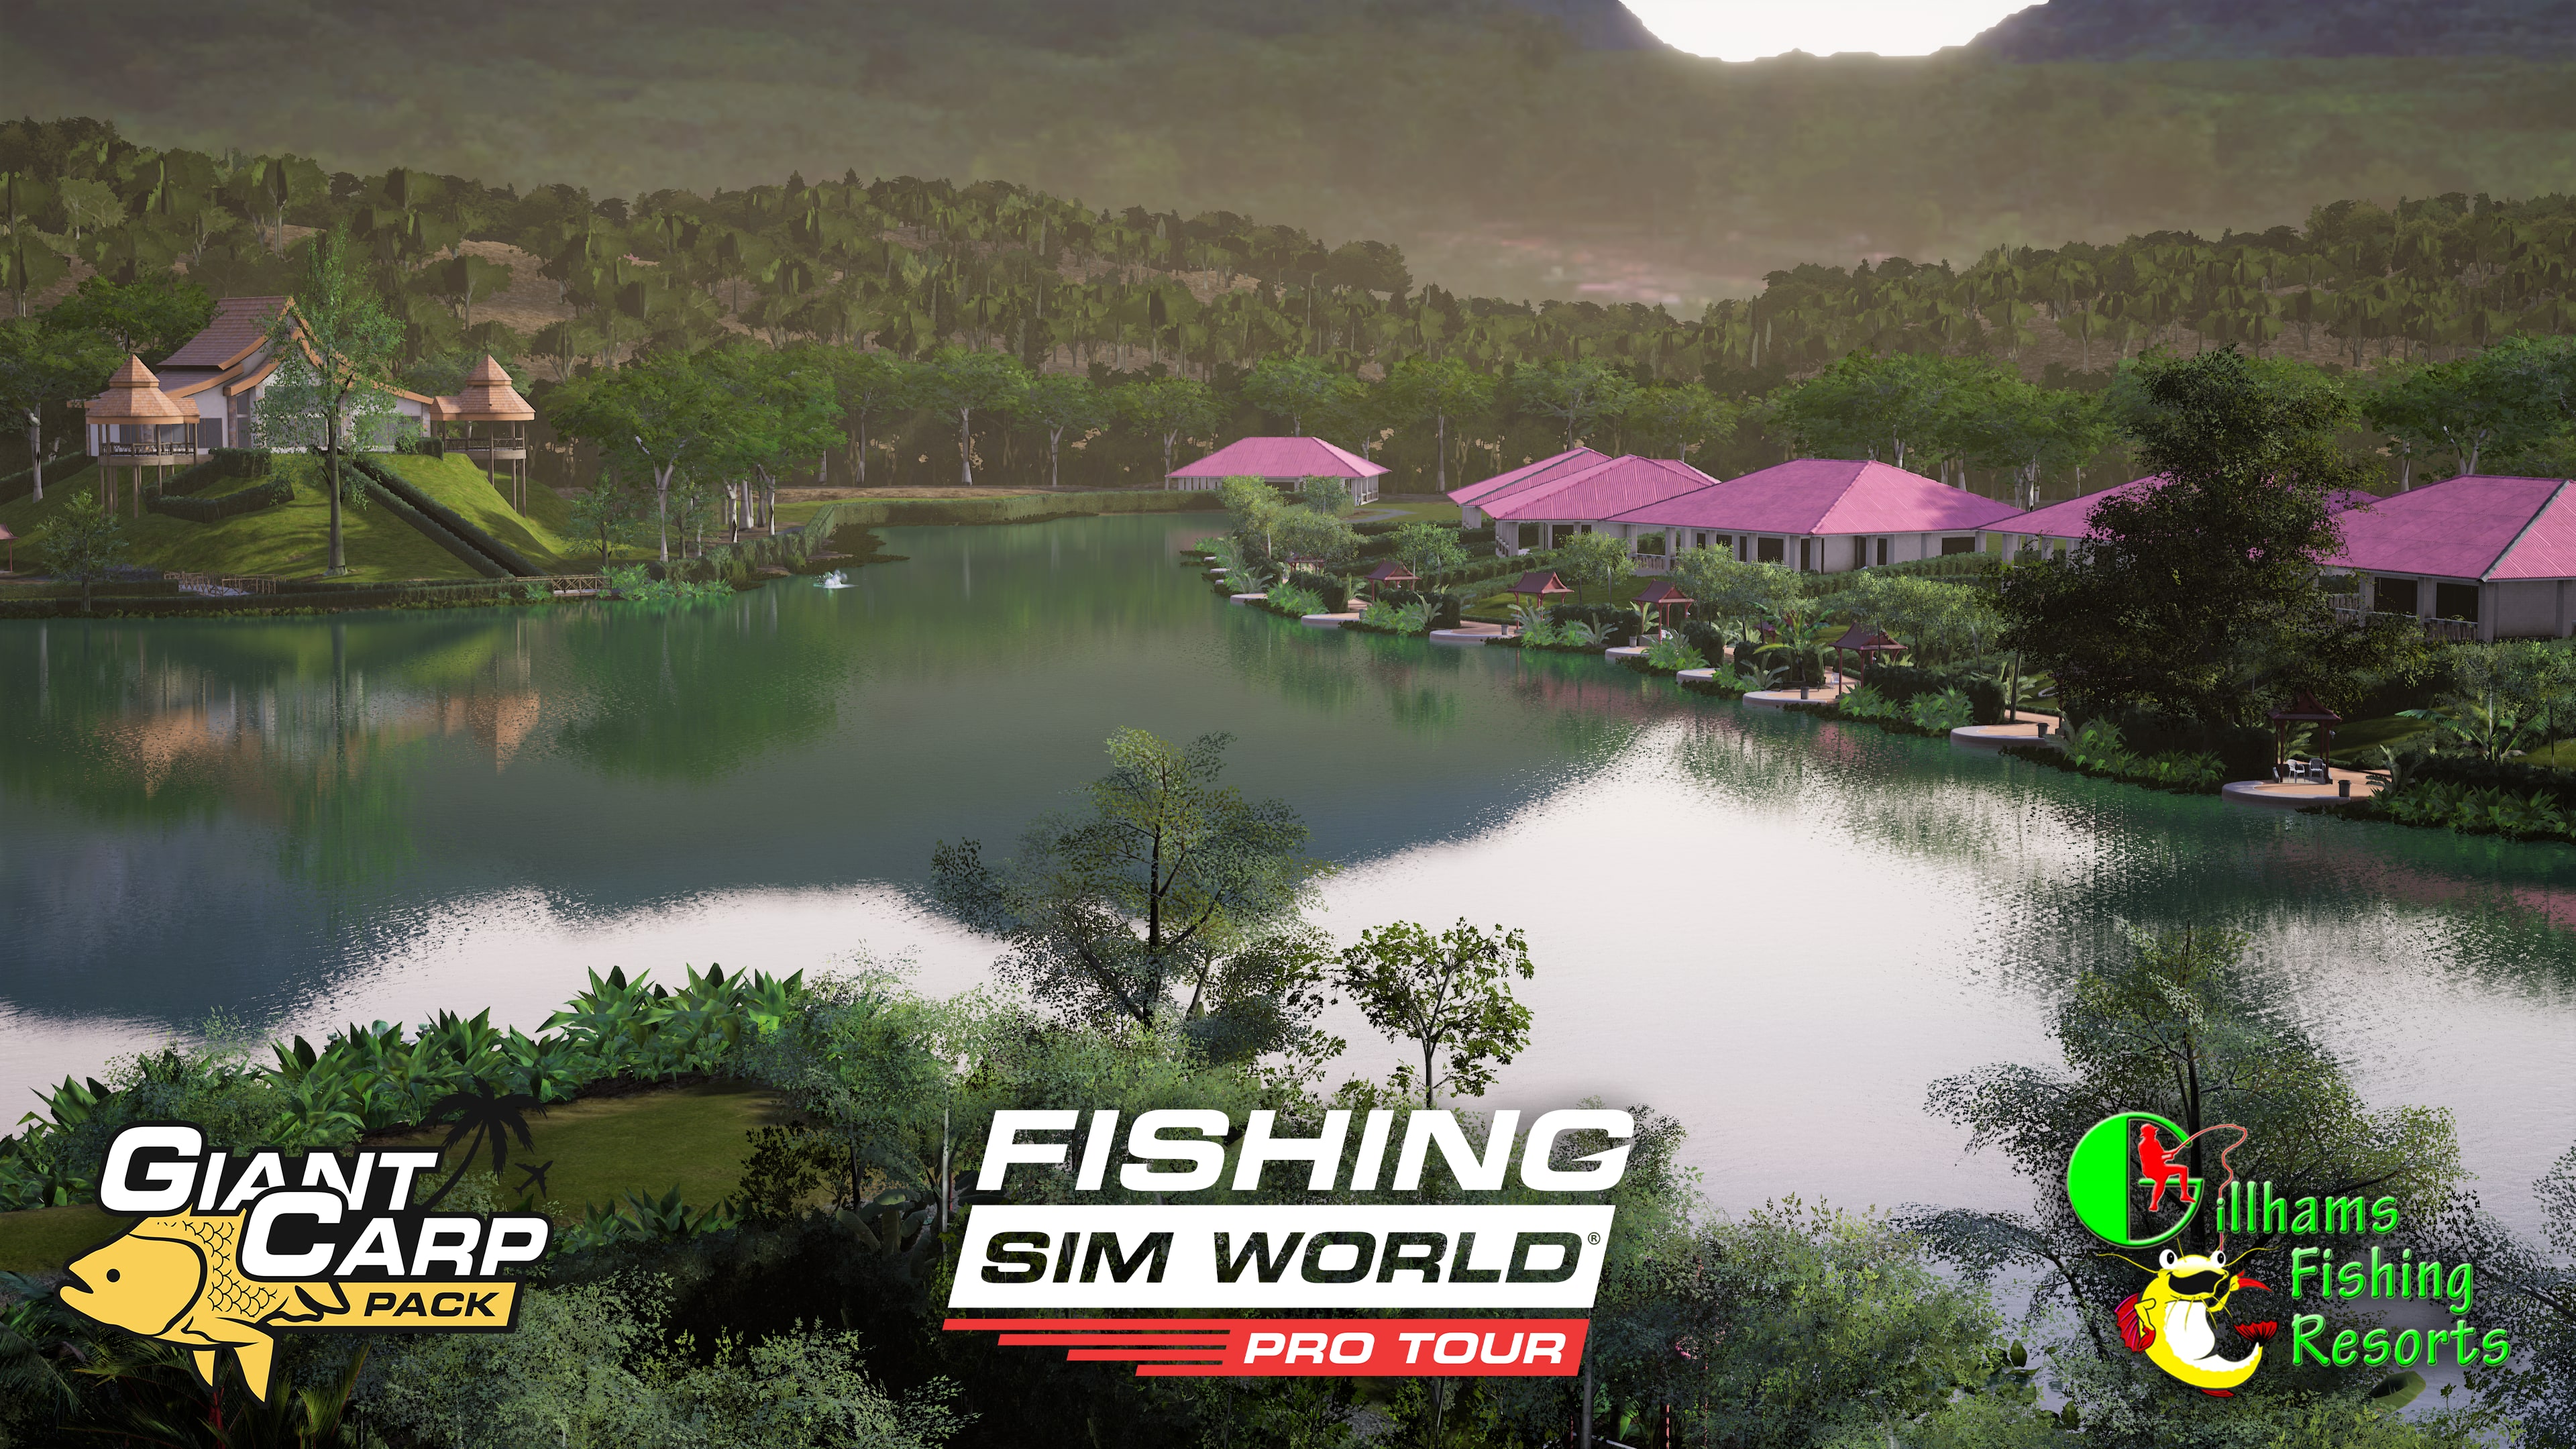 Fishing Sim World: Pro Tour - Gillhams Fishing Resort